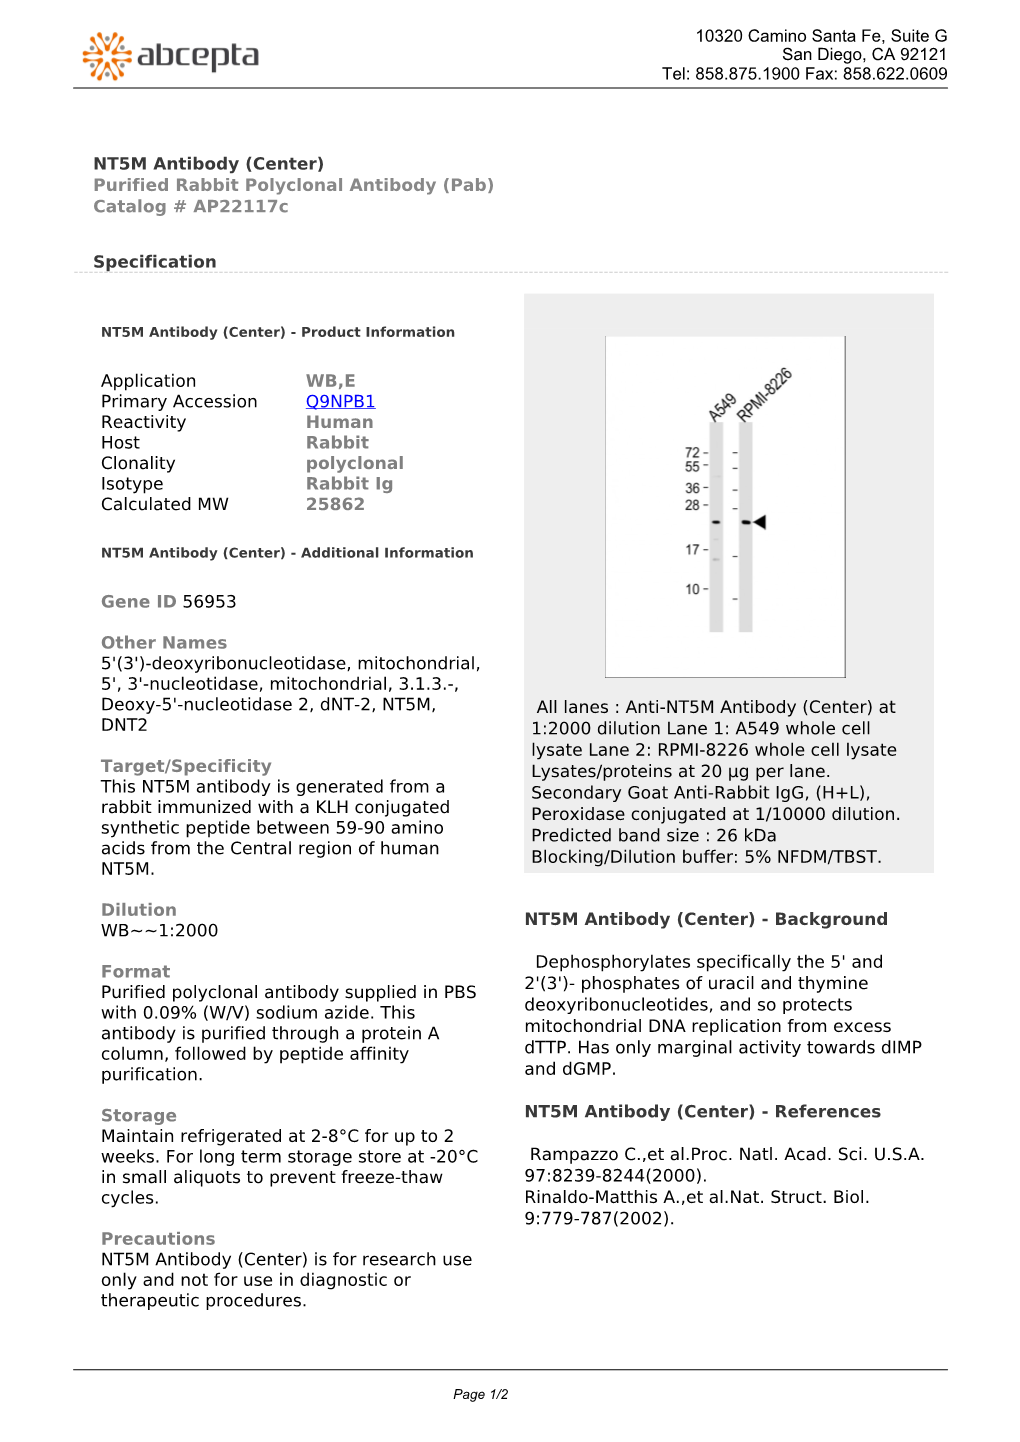 NT5M Antibody (Center) Purified Rabbit Polyclonal Antibody (Pab) Catalog # Ap22117c